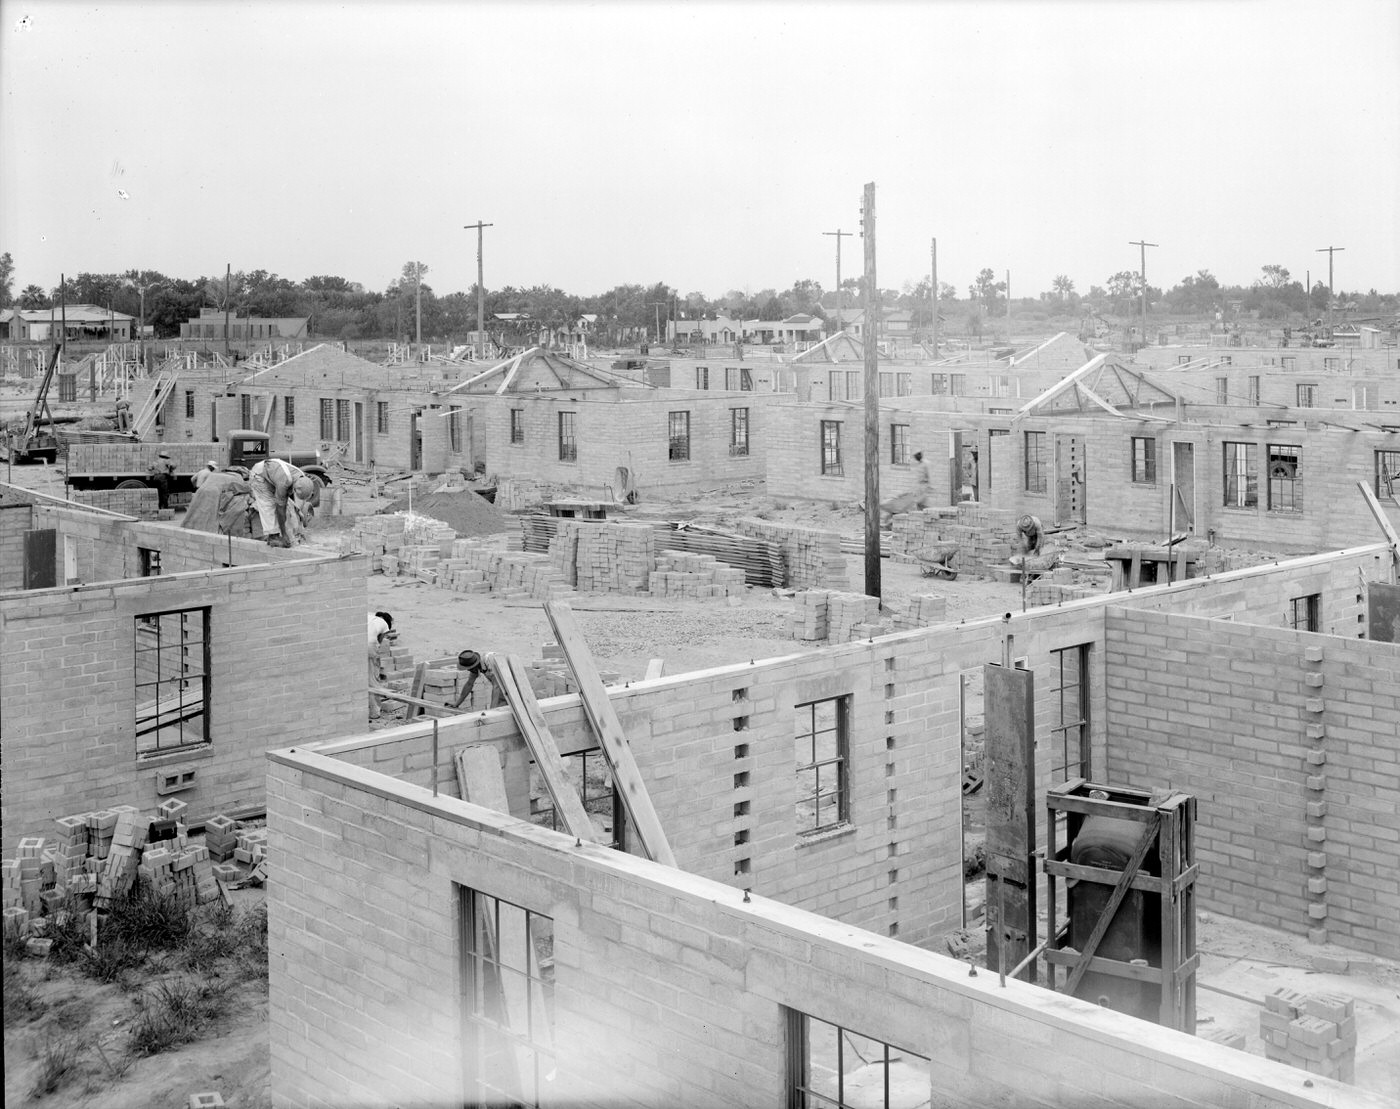 E. W. Duhame Construction Co. Site, 1941